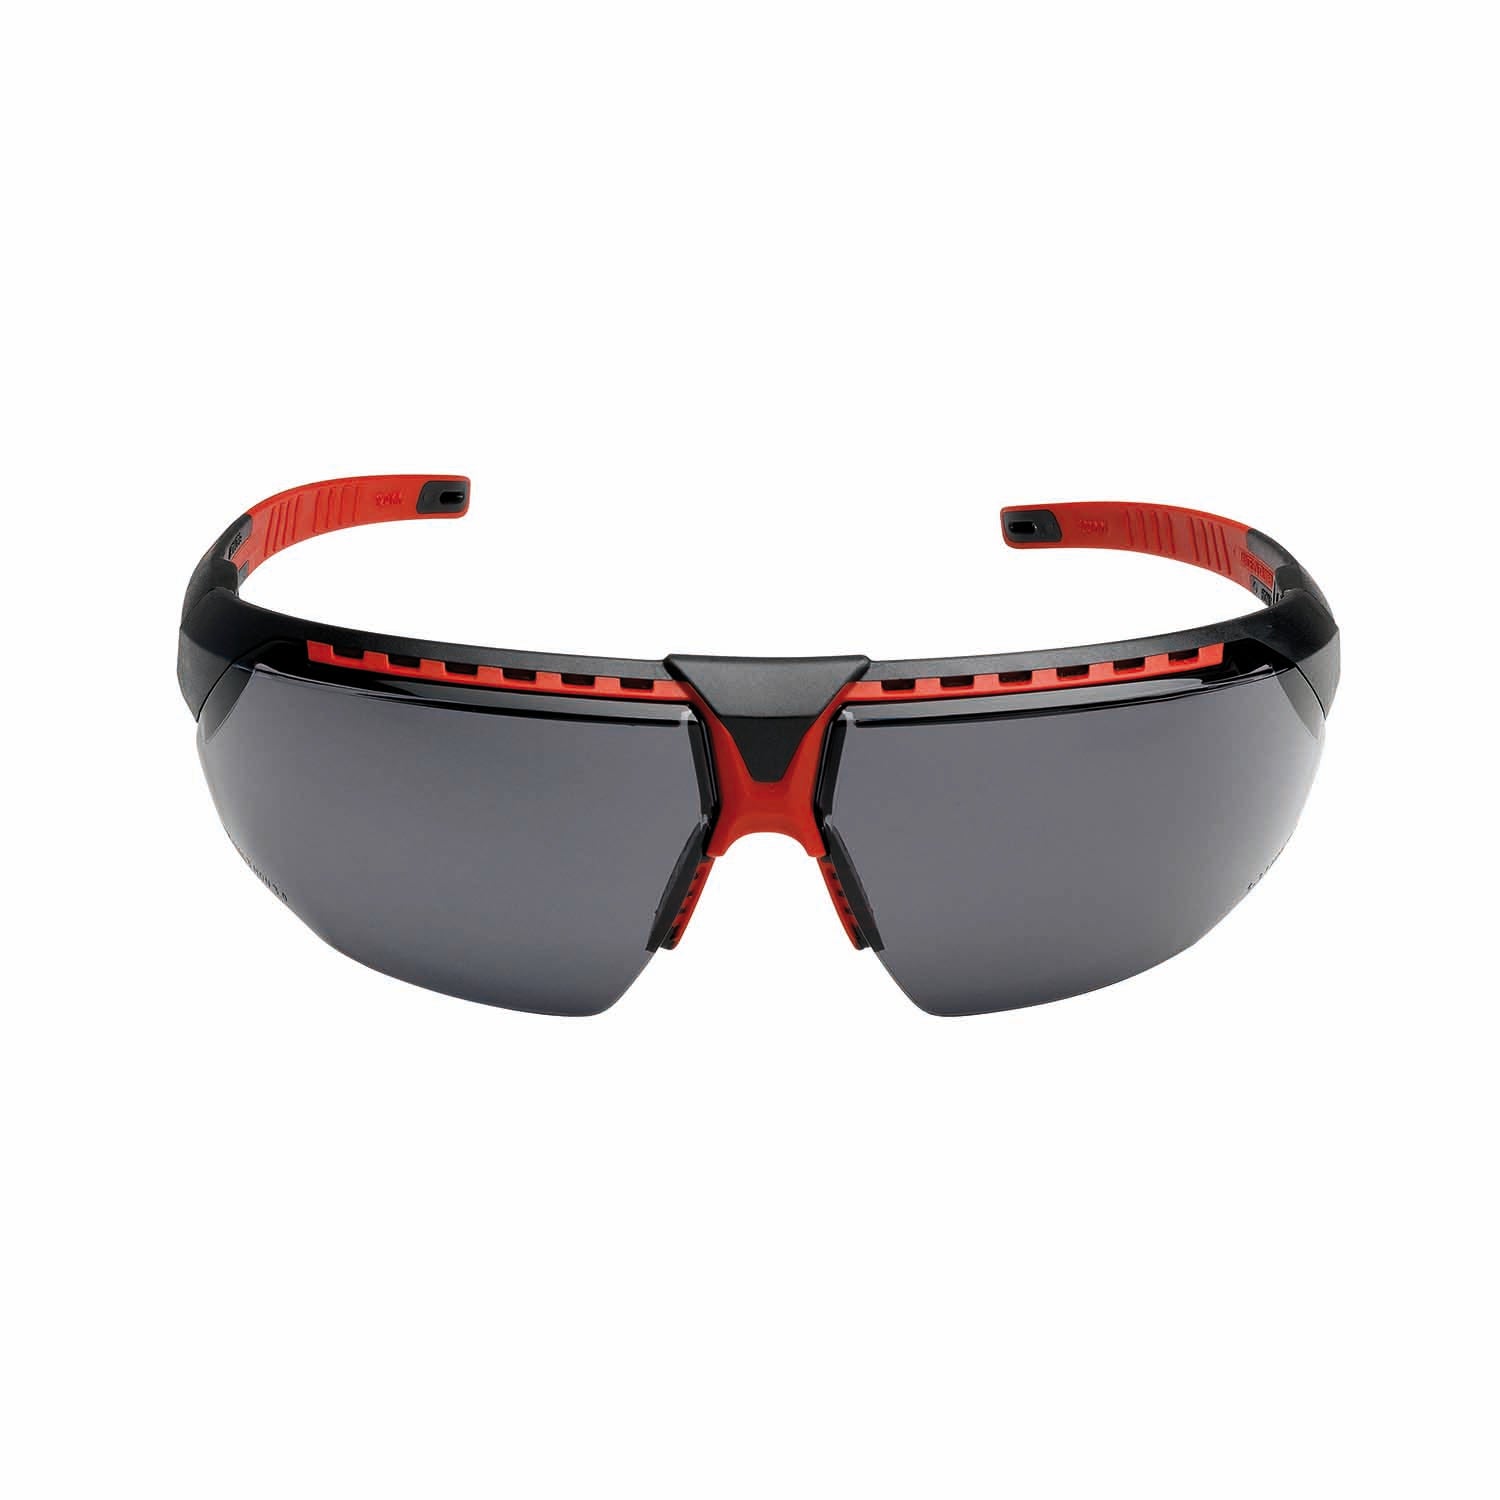 Honeywell 1034837 AVATAR Safety Spectacles Black/Red Frame Grey Lens